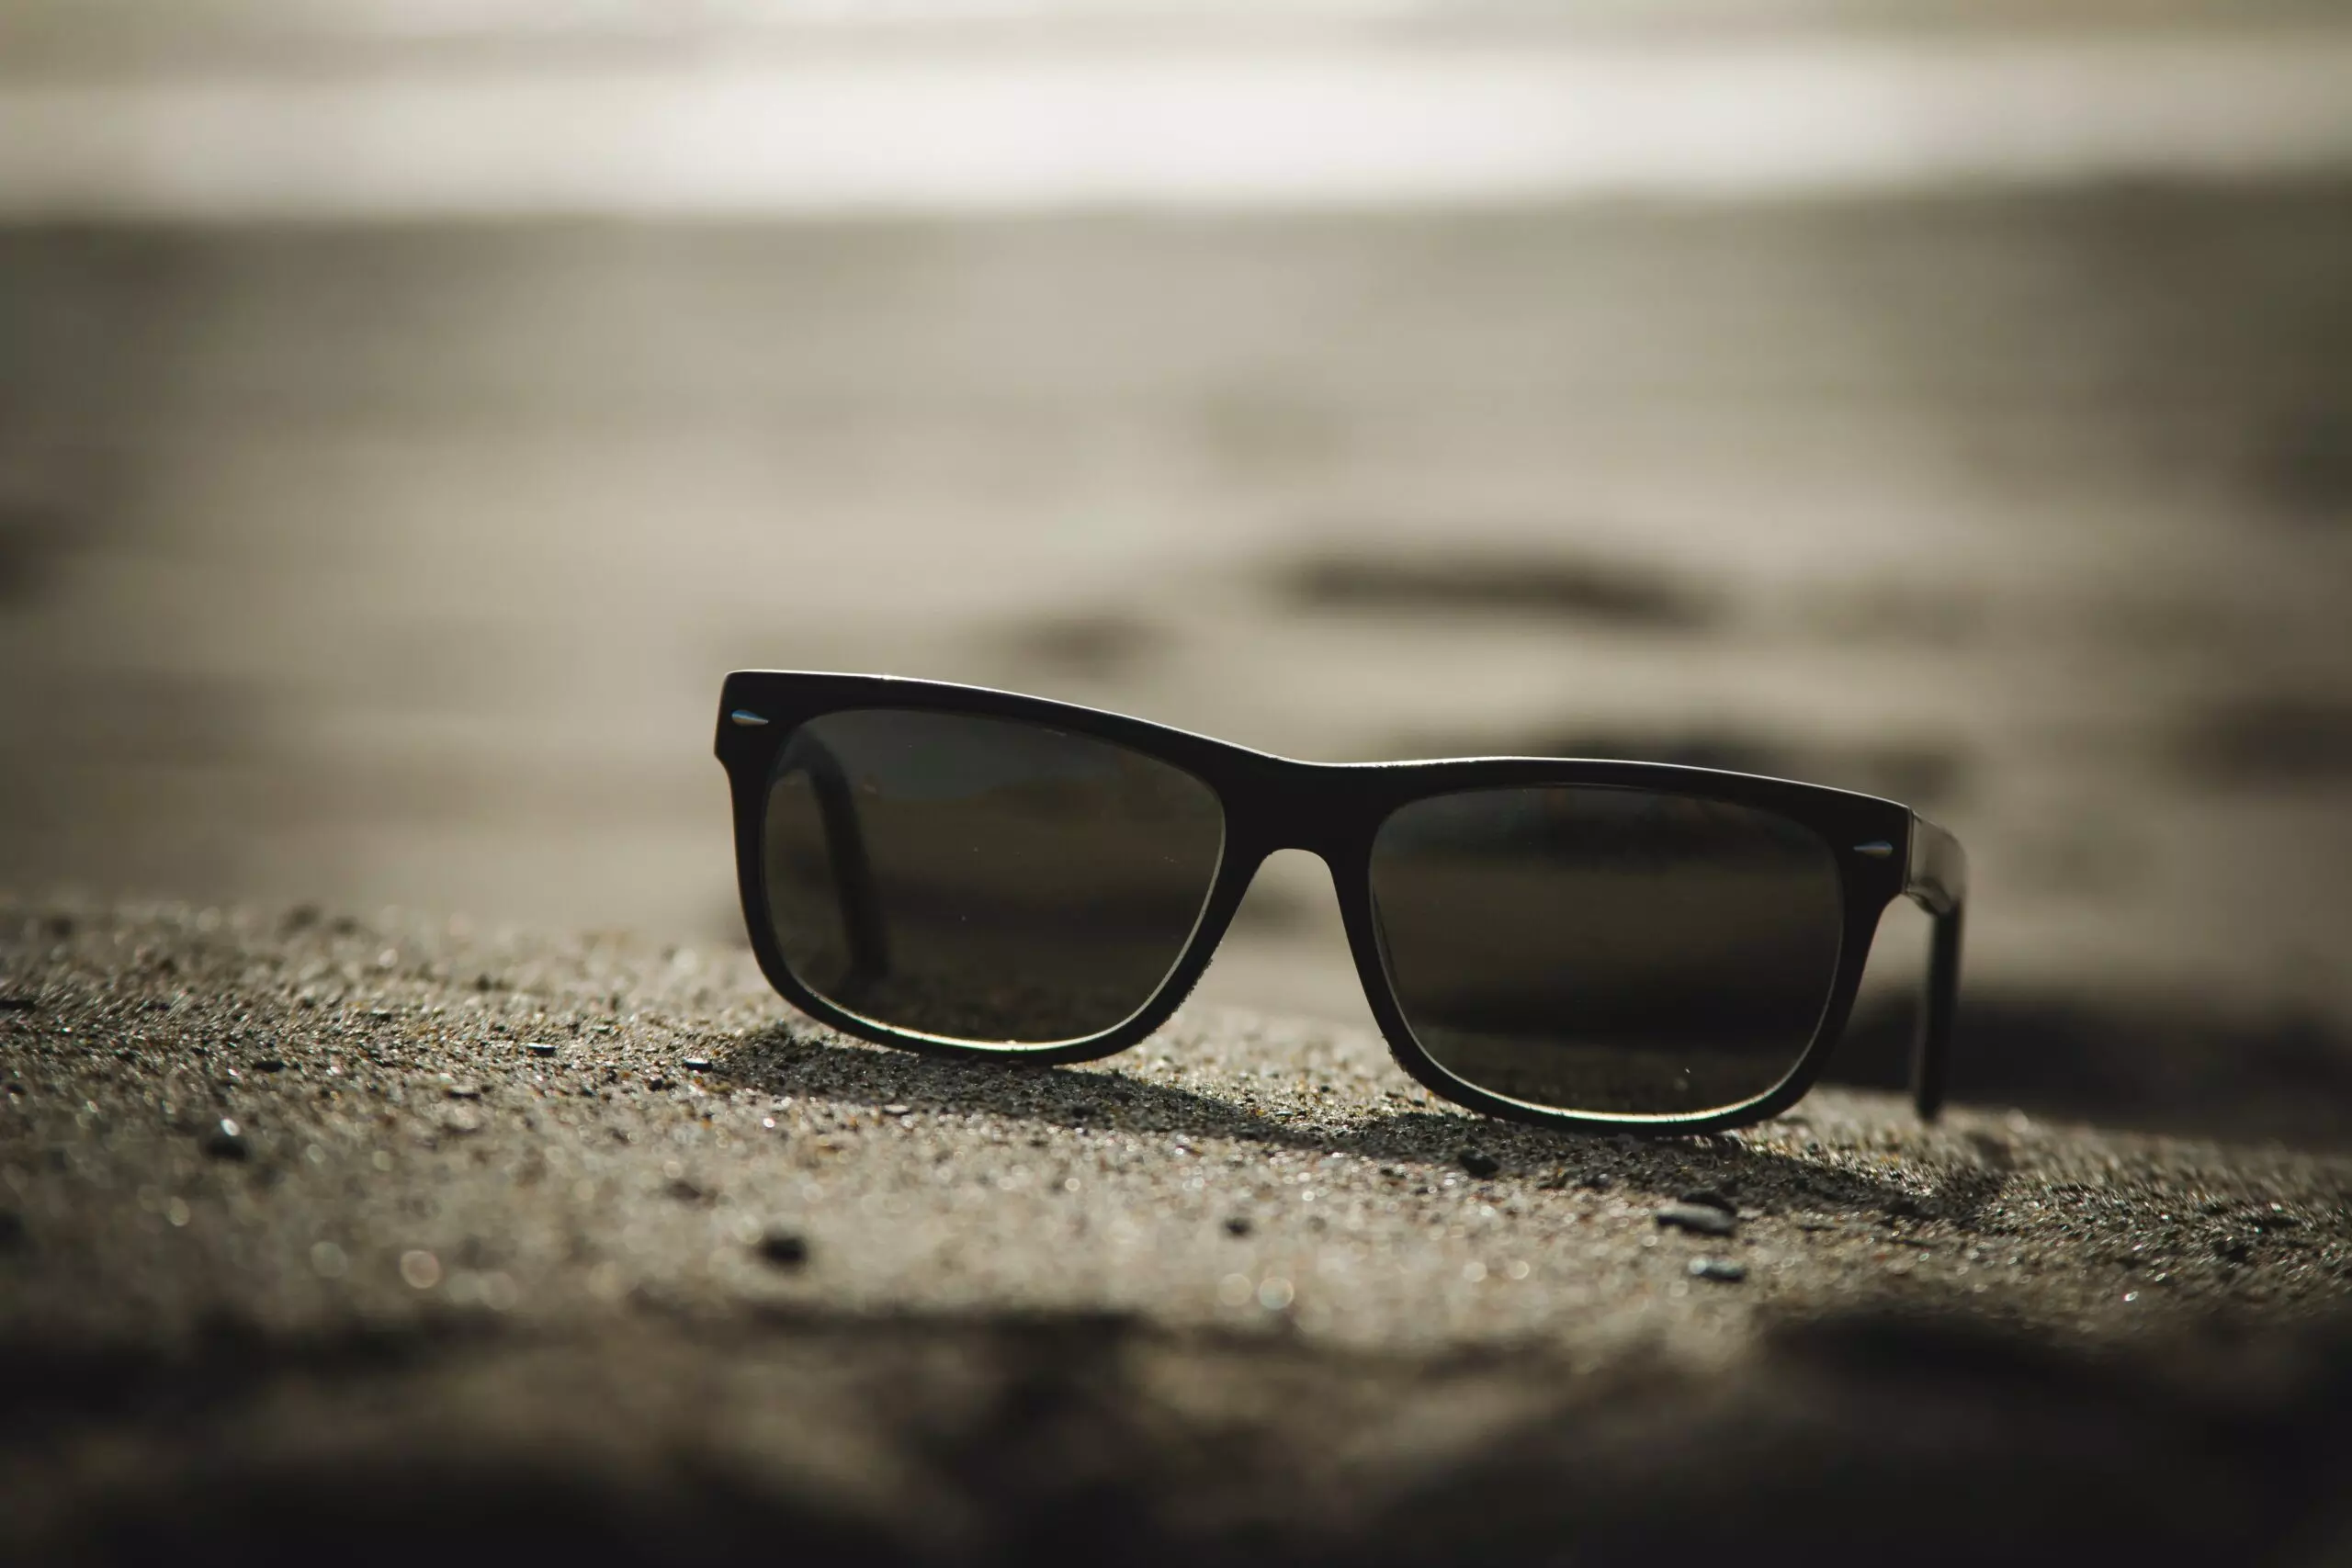 Product Spotlight: Sunglasses for Summer